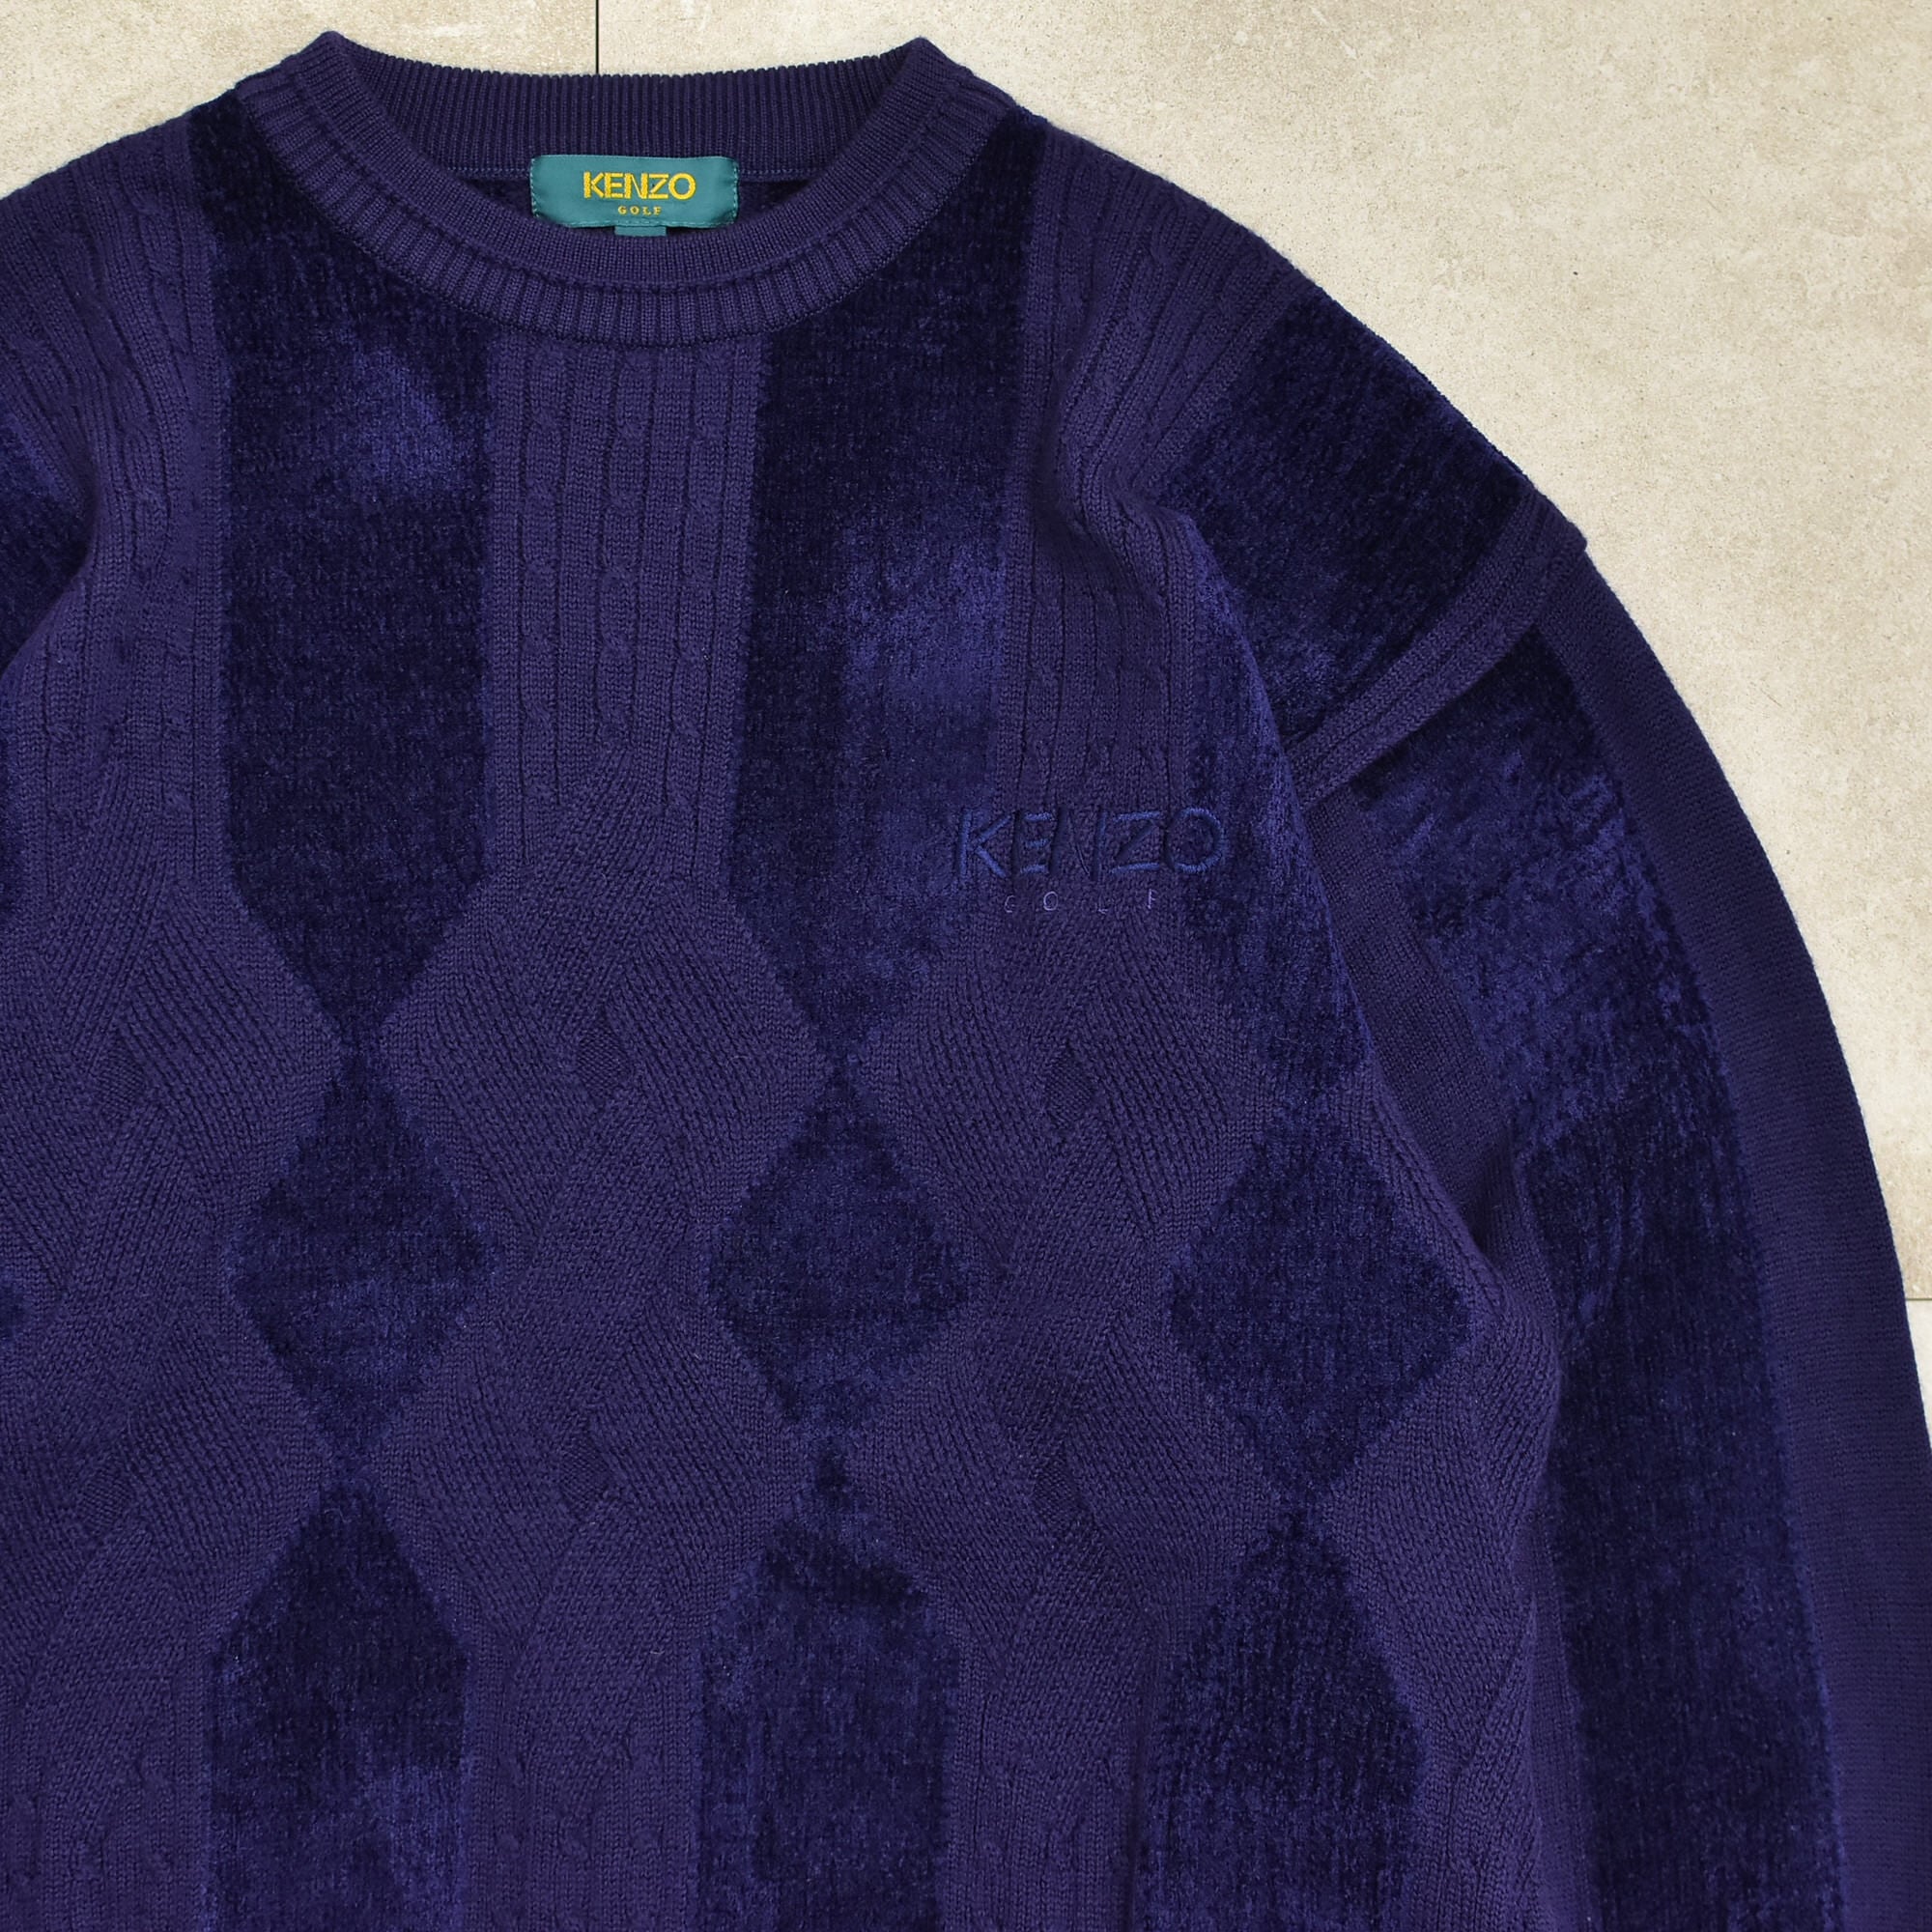 90s KENZO GOLF design sweater